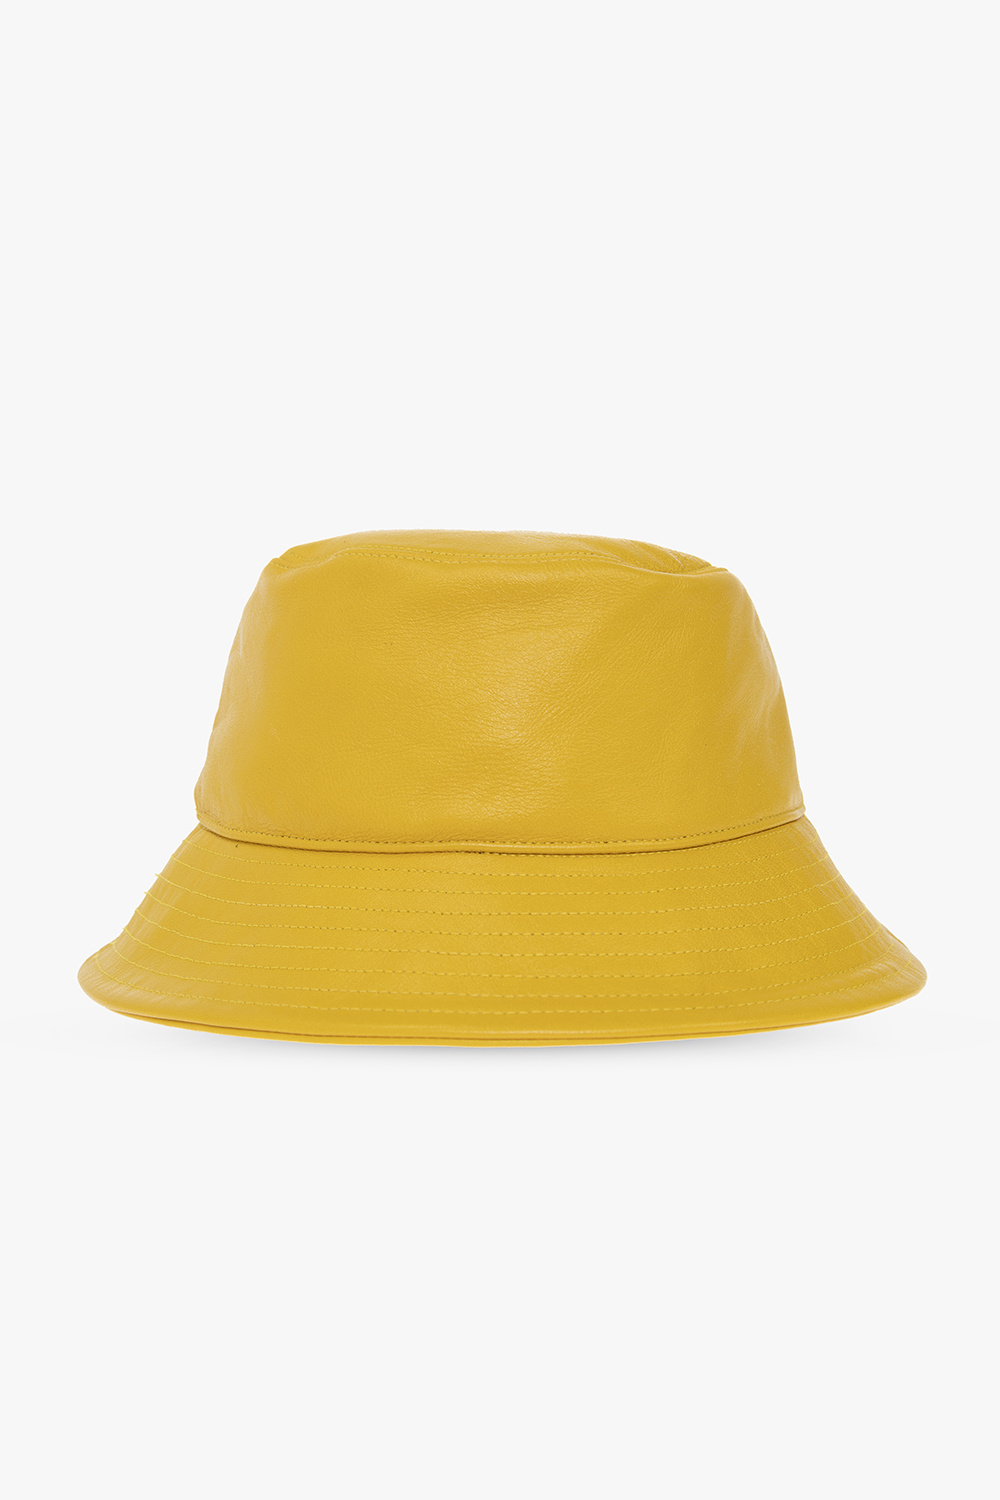 Rhude Leather Bay hat